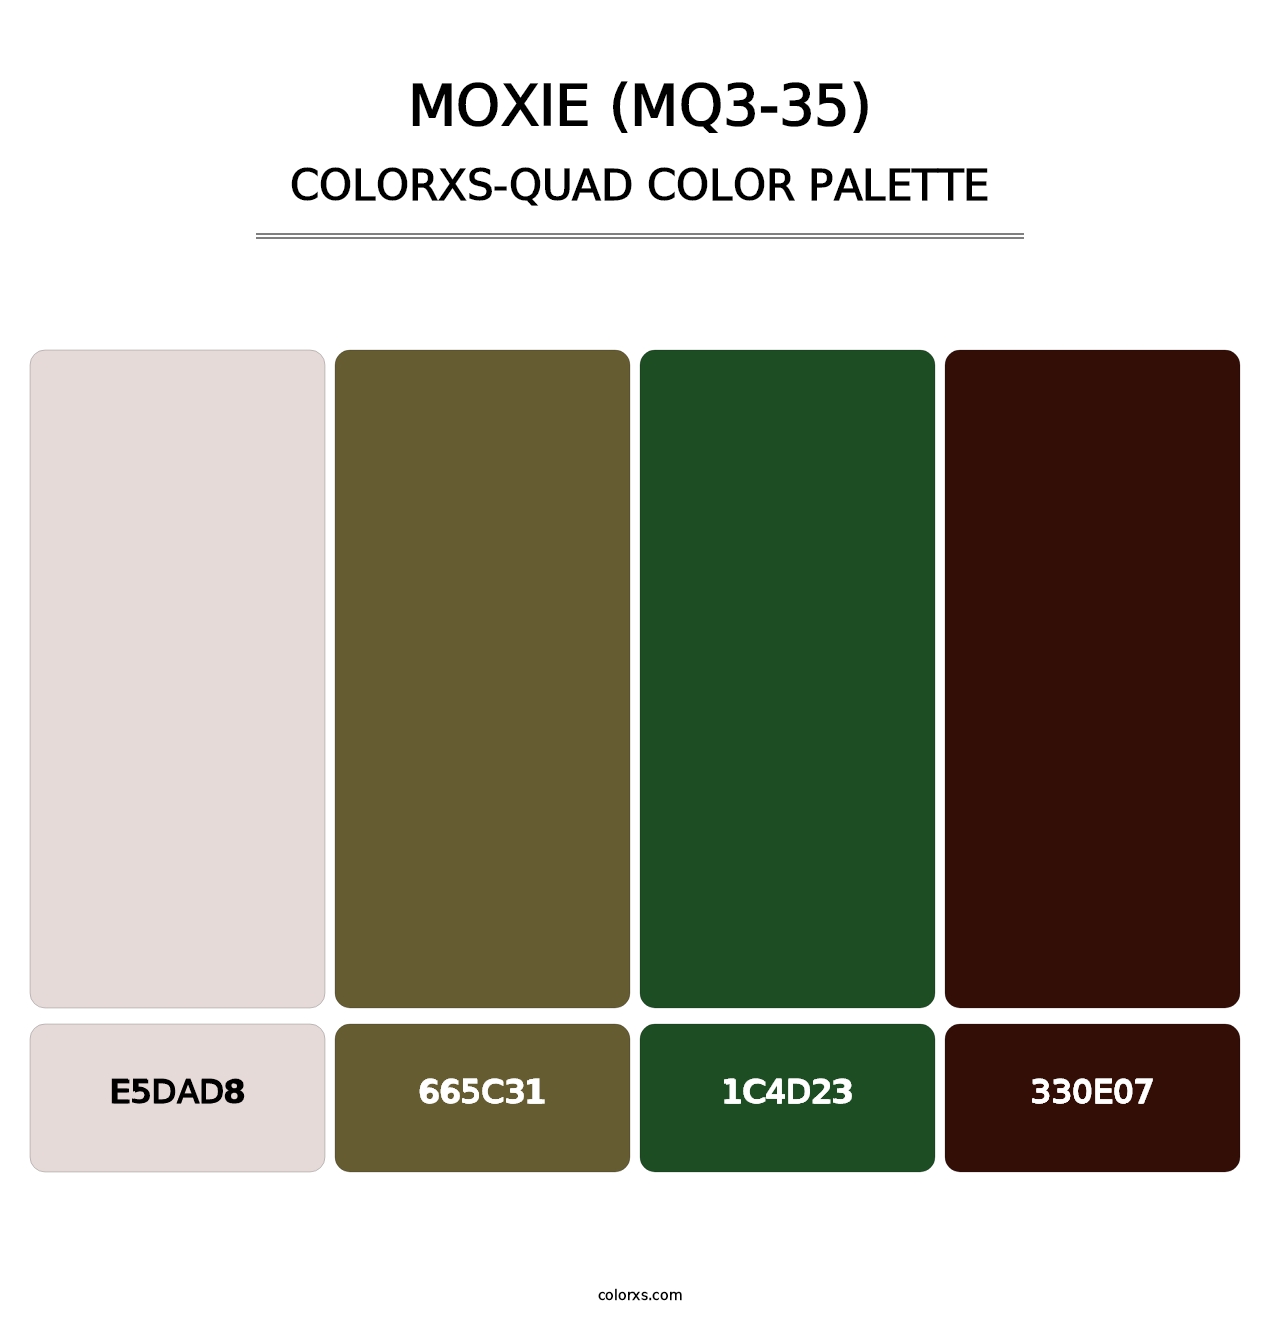 Moxie (MQ3-35) - Colorxs Quad Palette